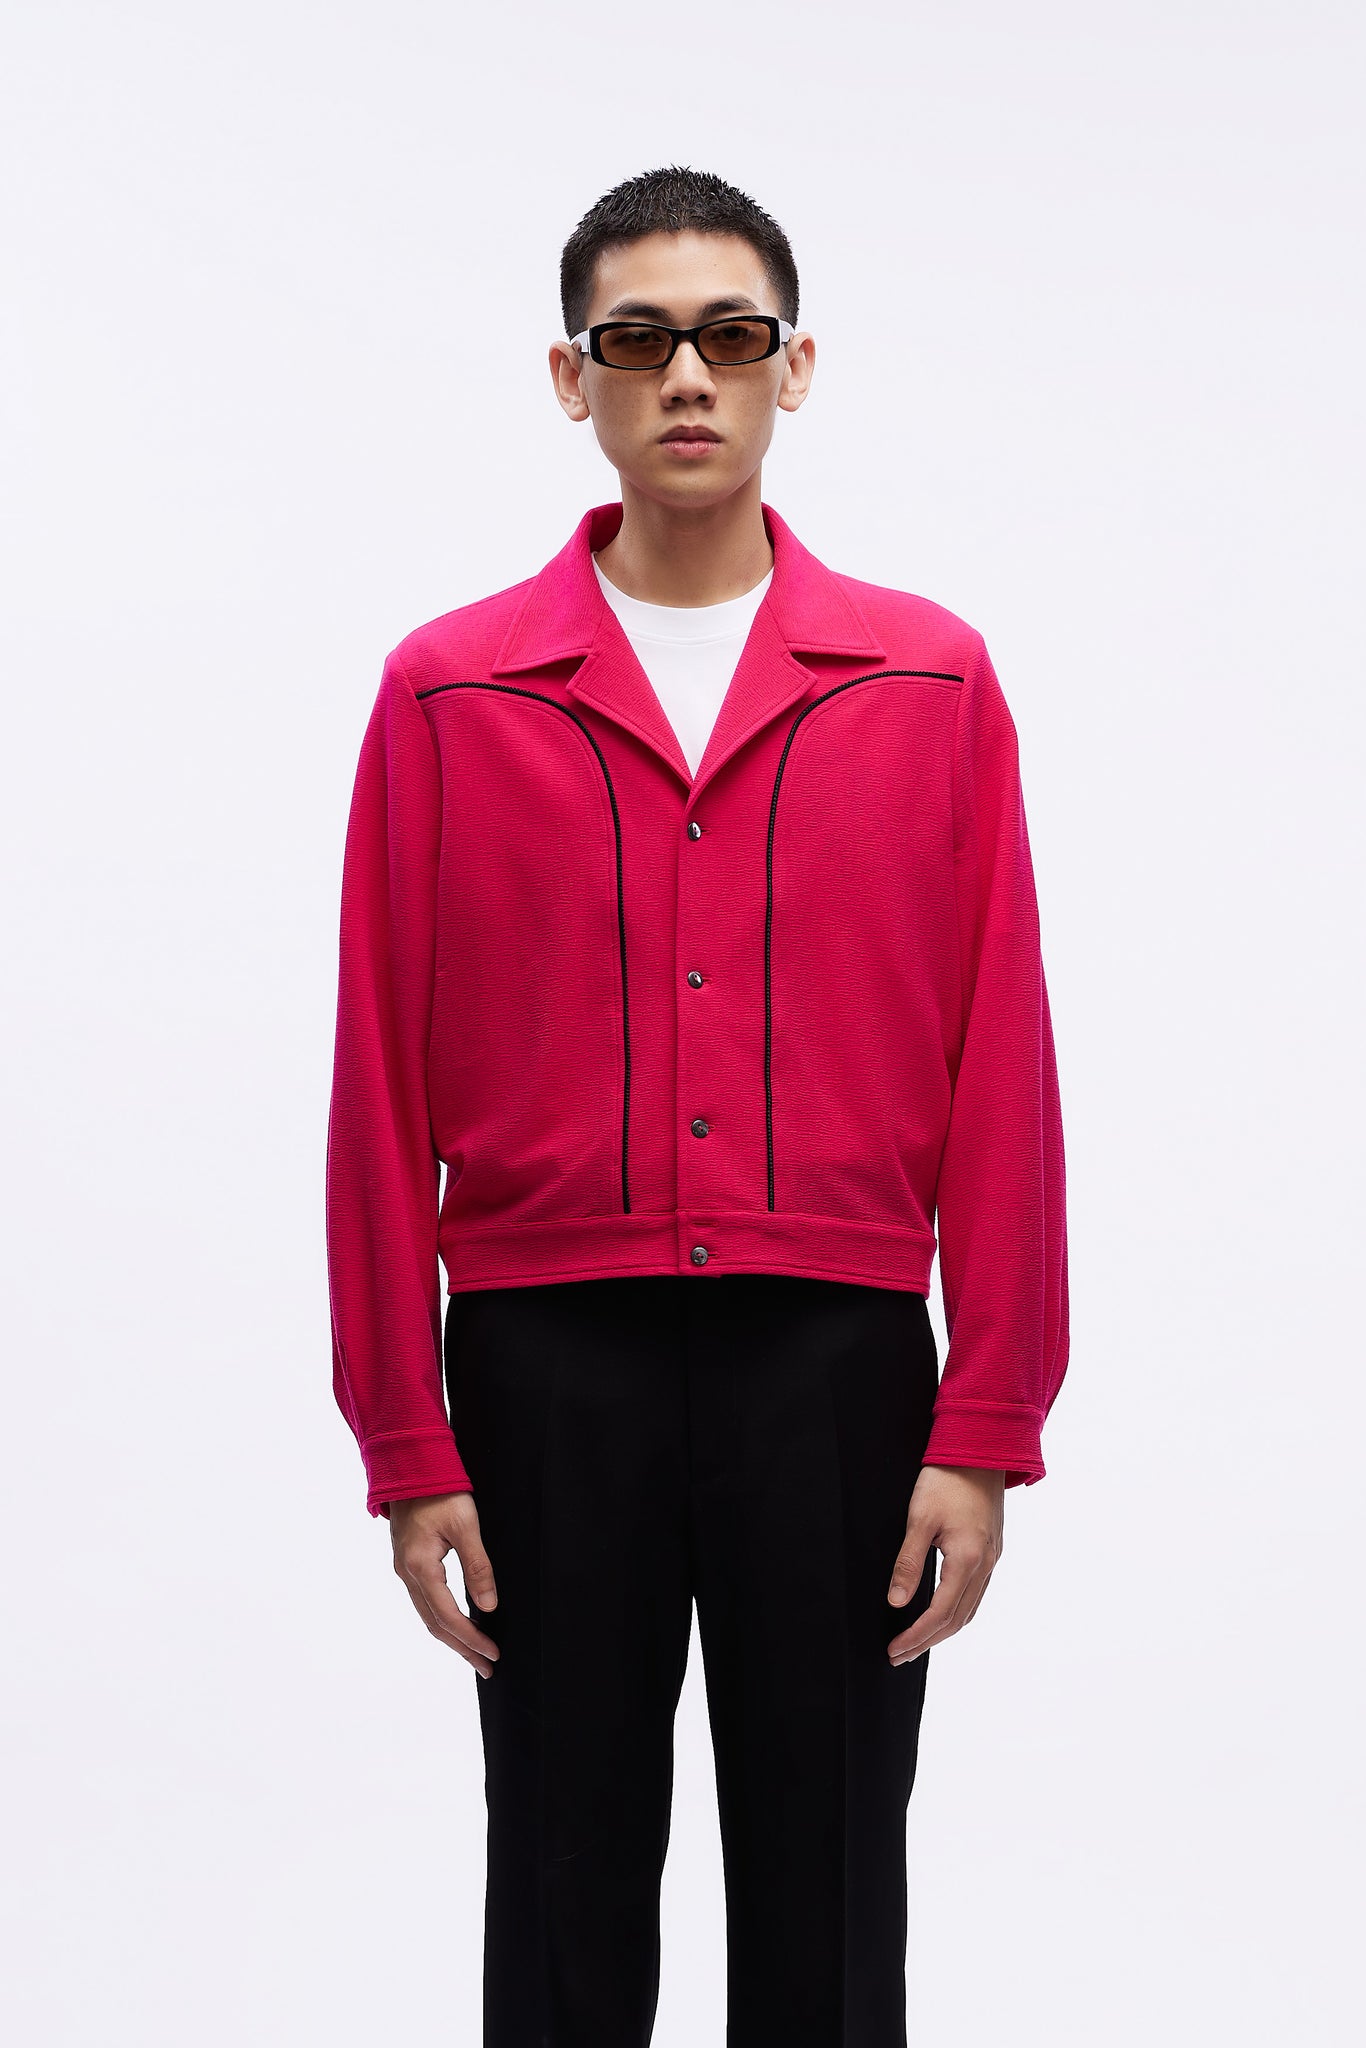 Valens Shirt/Jacket Hot Pink / Black